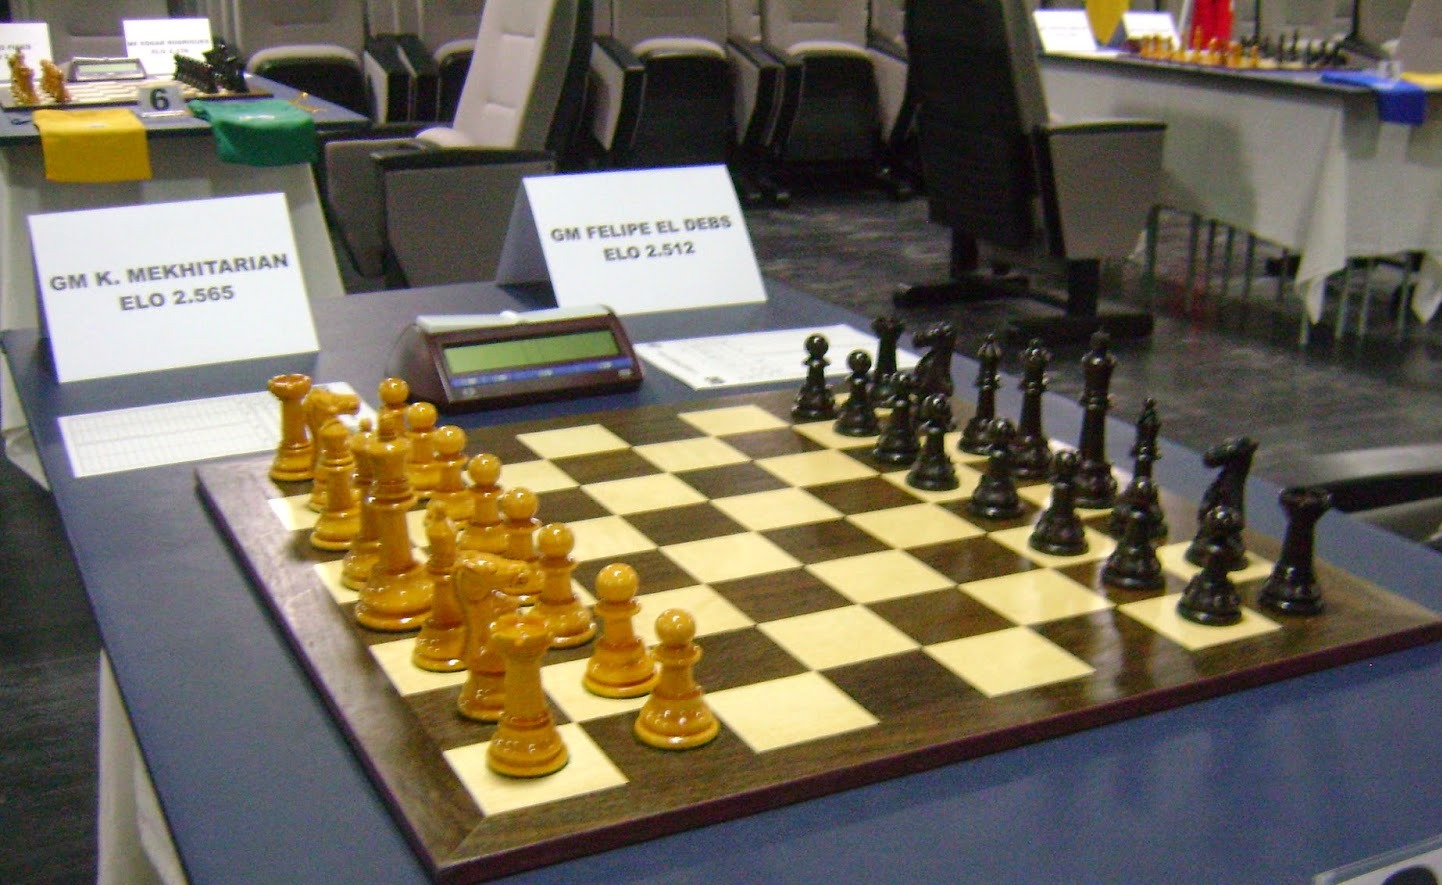 Enfrentando GM Krikor ao vivo! GM Krikor Vs Raffael Chess 